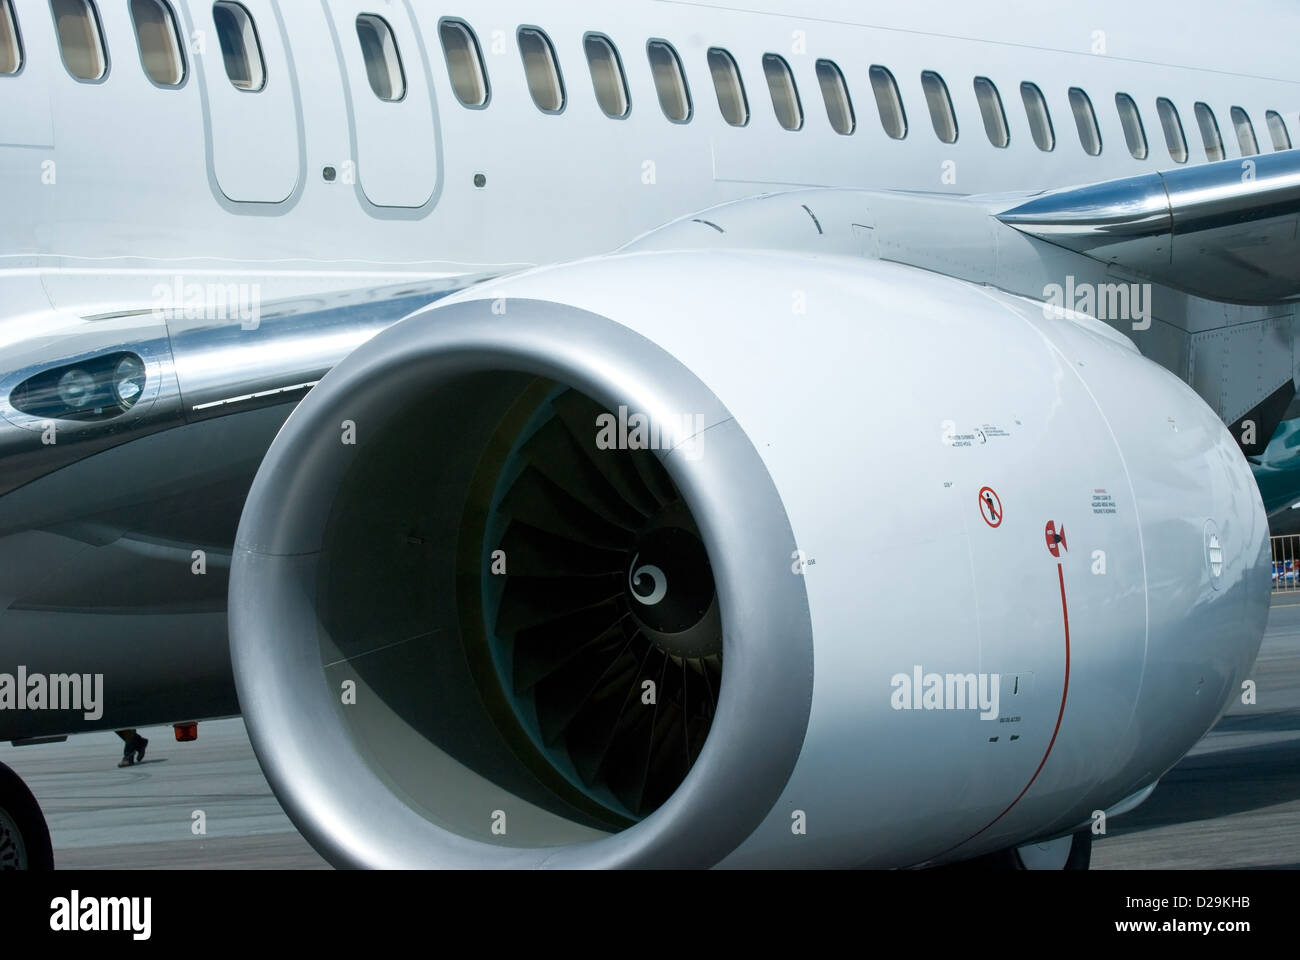 Engine and windows of airplane Stock Photo